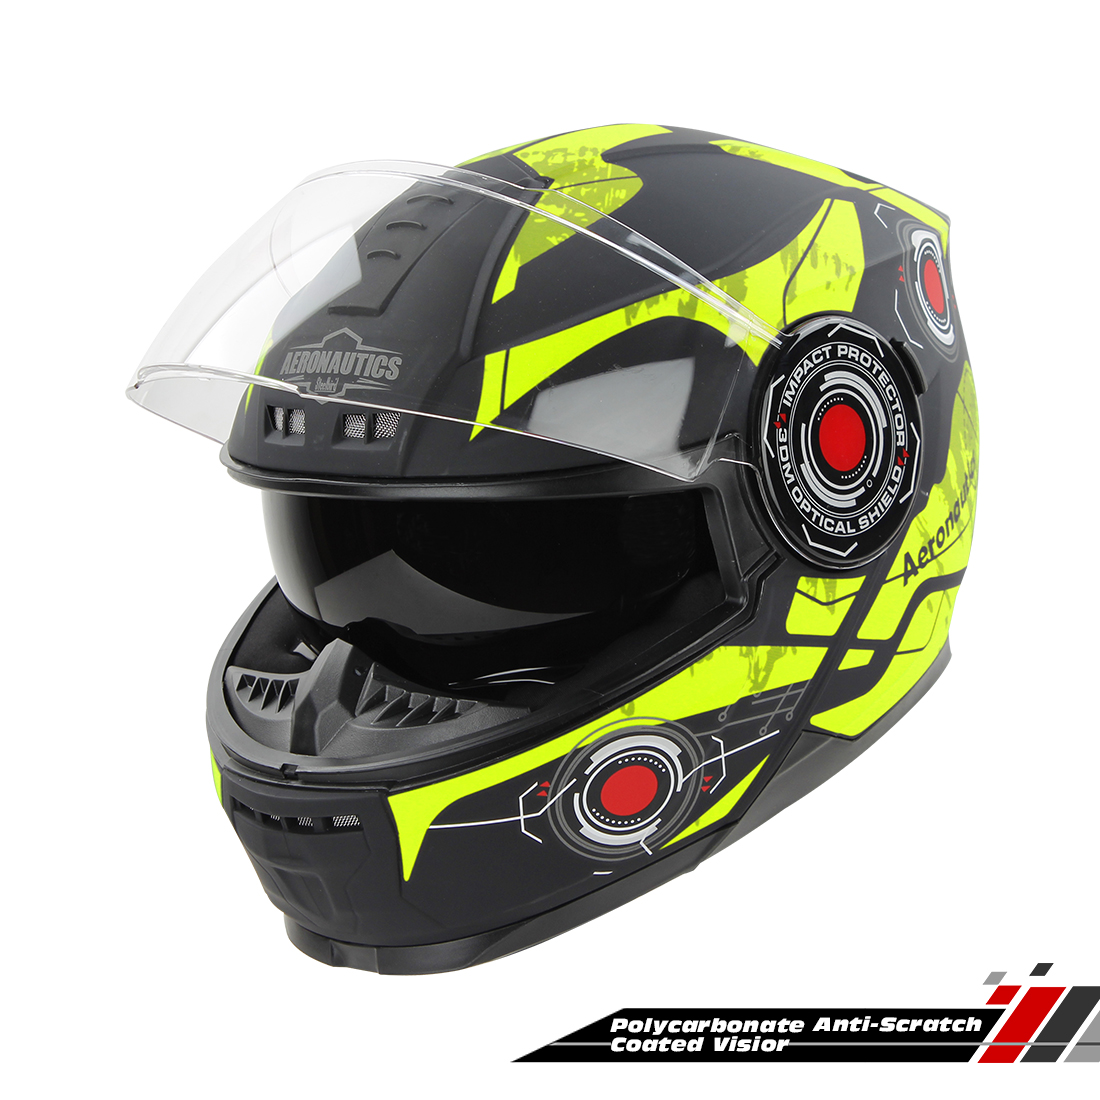 Steelbird SBH-40 Cyber ISI Certified Full Face Graphic Helmet For Men And Women With Inner Sun Shield (Matt Black Neon)